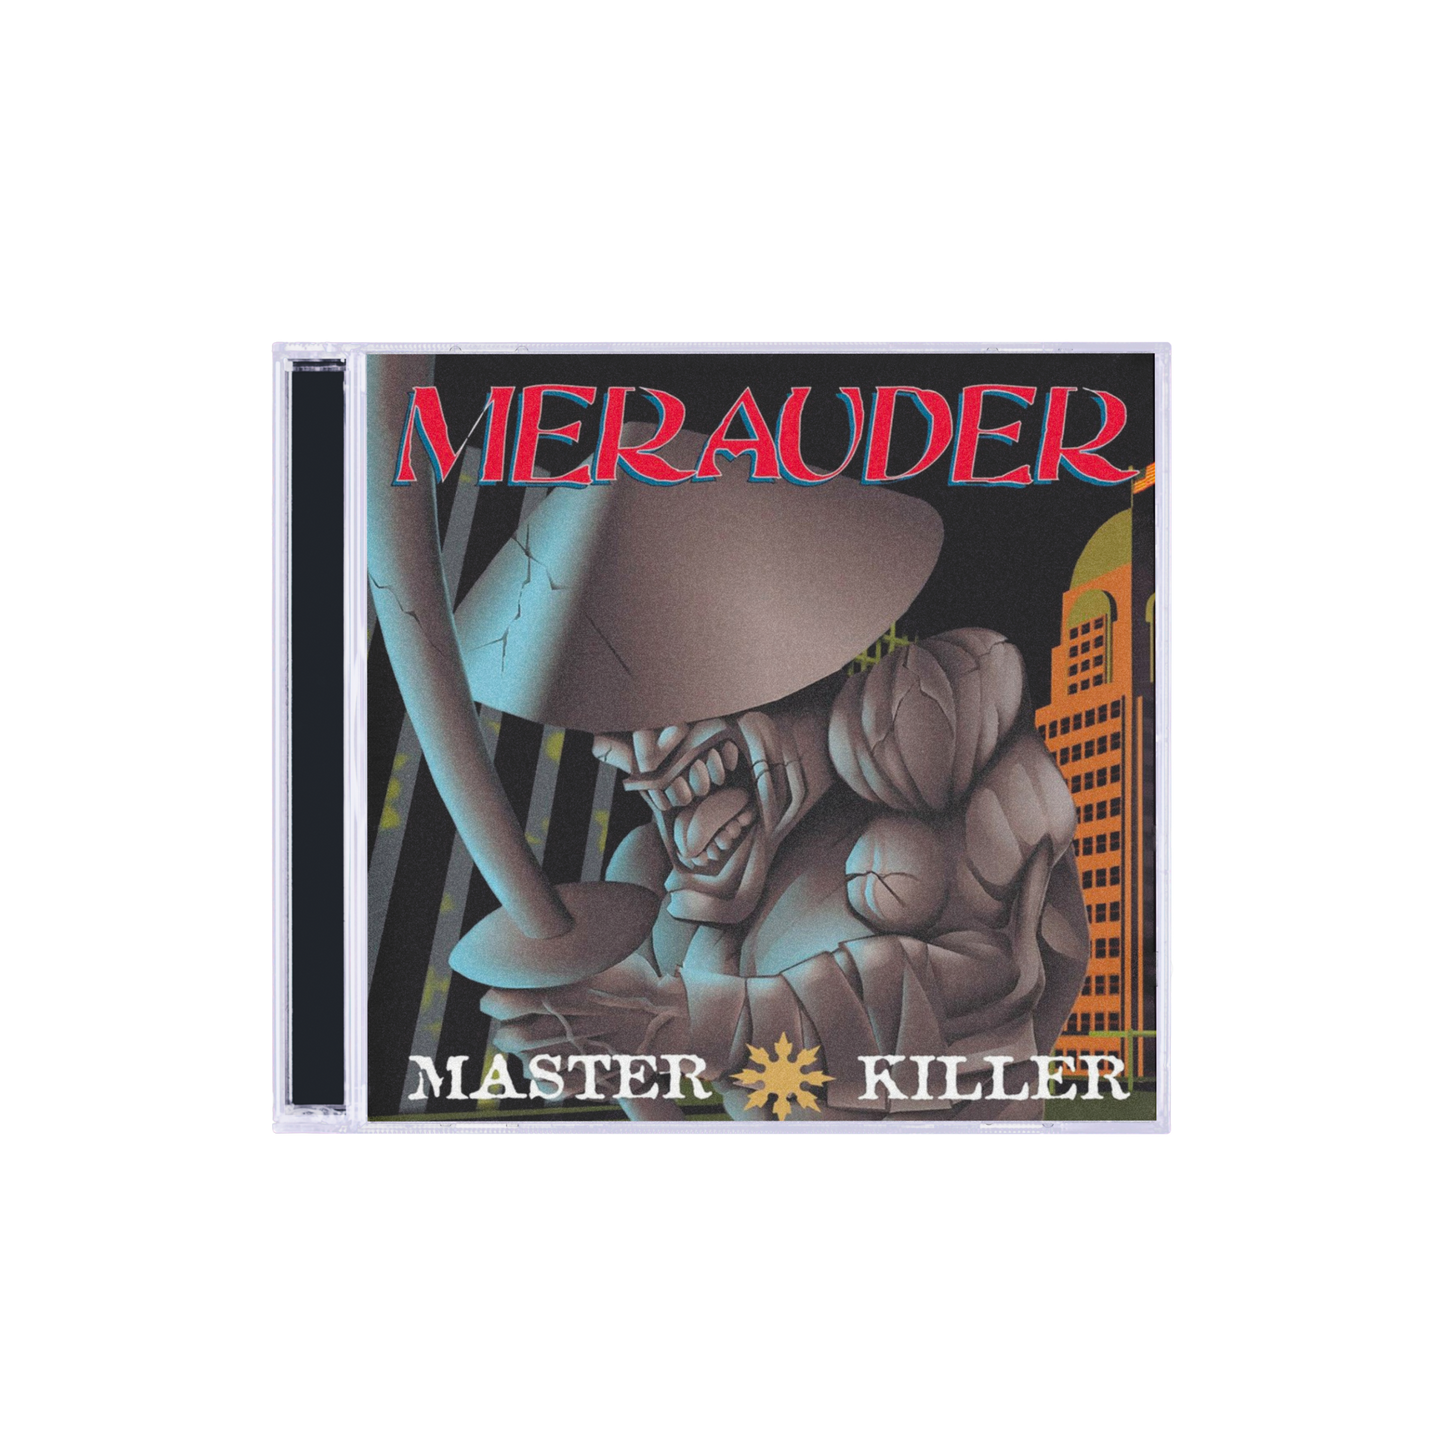 Merauder  "Master Killer" CD